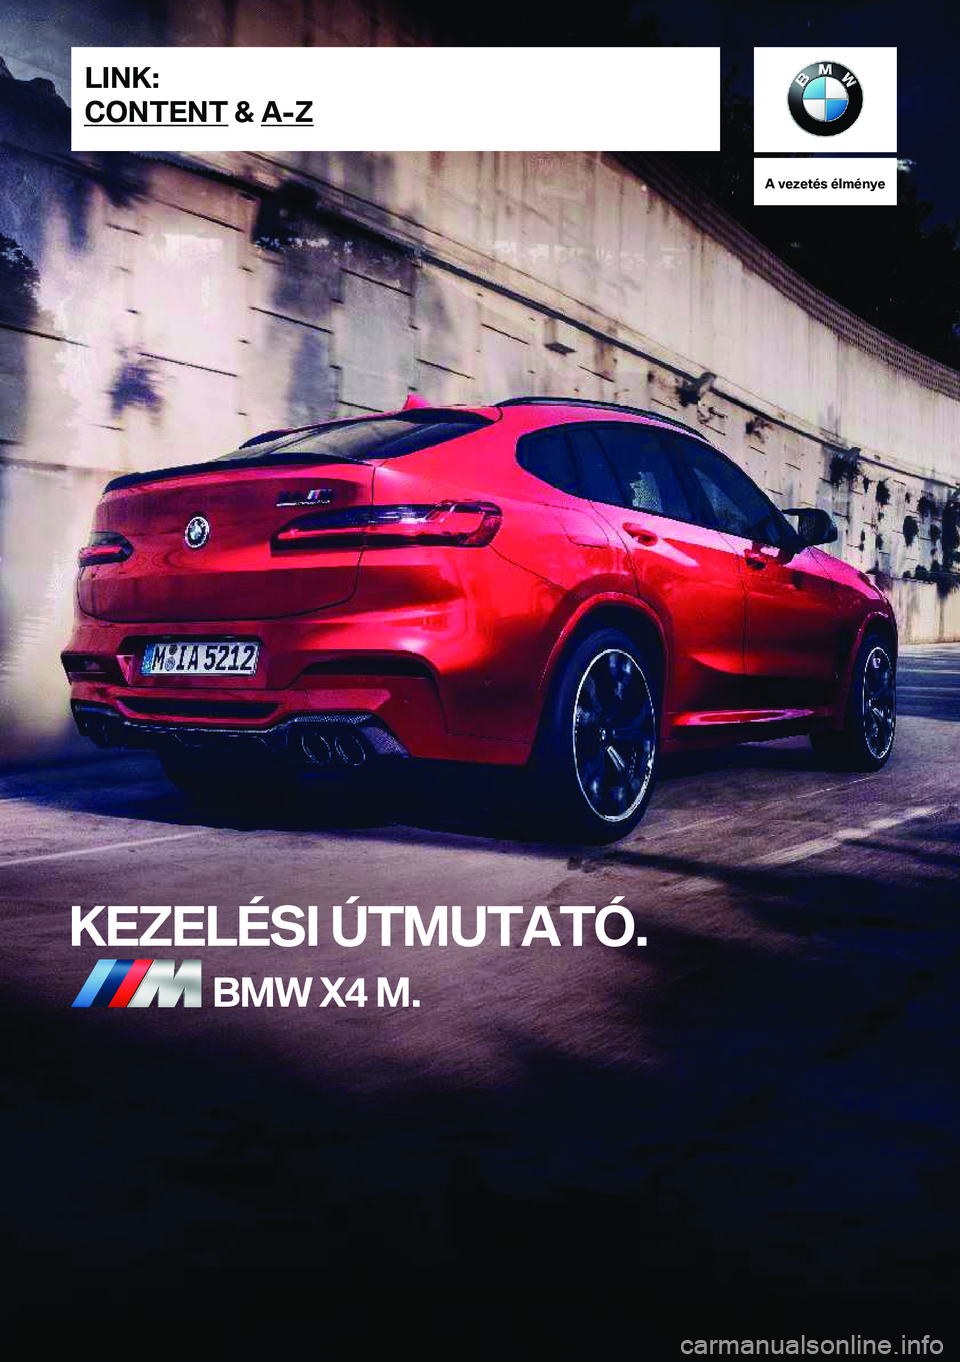 BMW X4 M 2020  Kezelési útmutató (in Hungarian) �A��v�e�z�e�t�